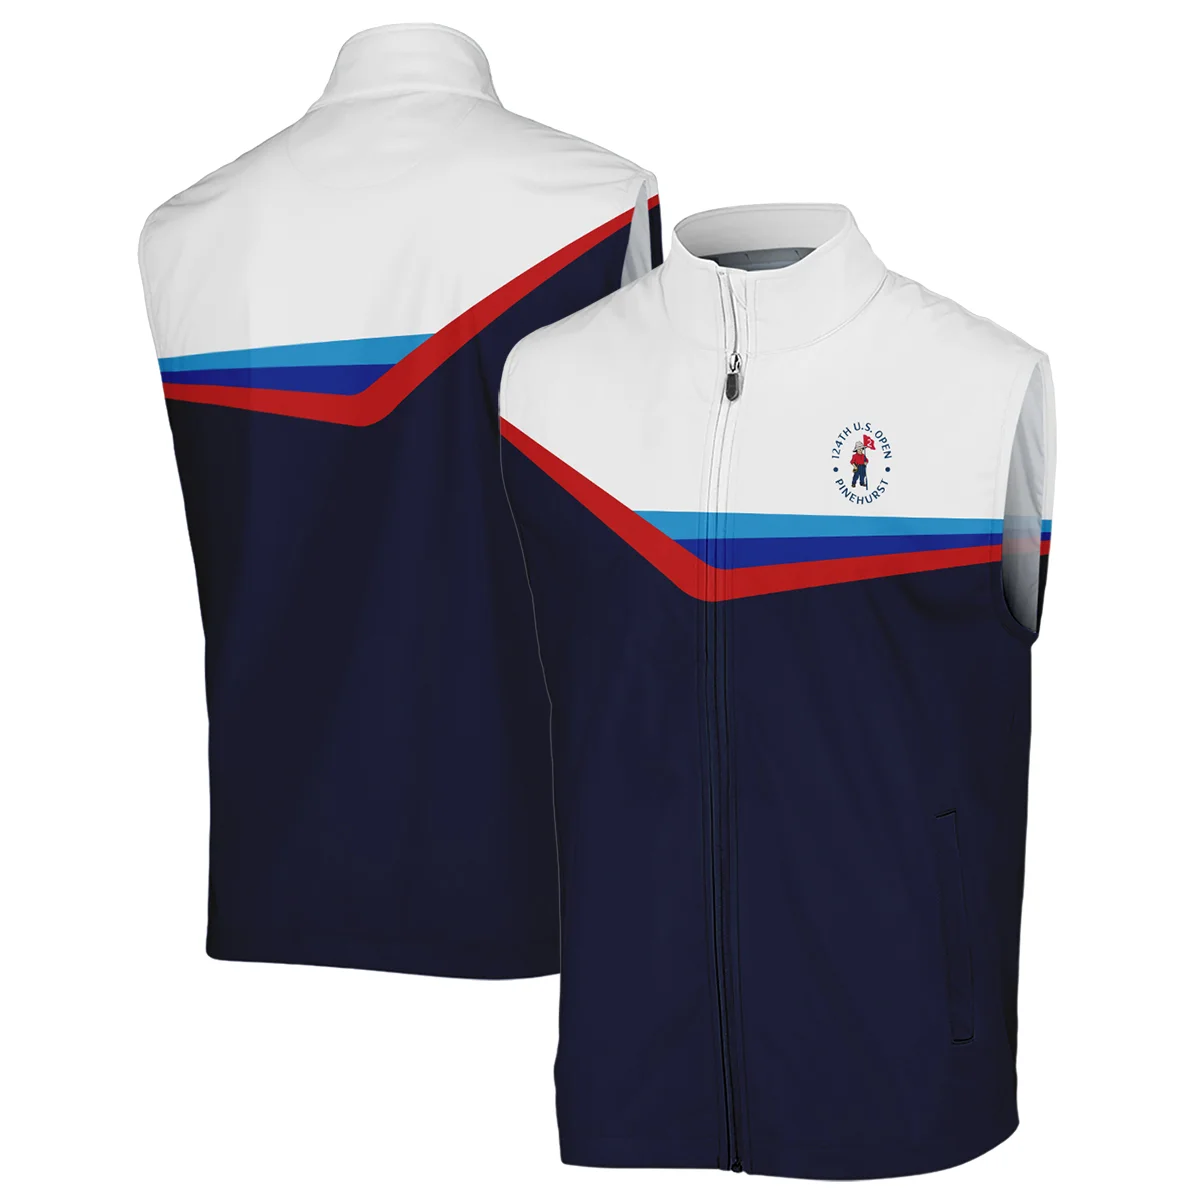 124th U.S. Open Pinehurst Golf Blue Red Line White Pattern Rolex Polo Shirt Mandarin Collar Polo Shirt